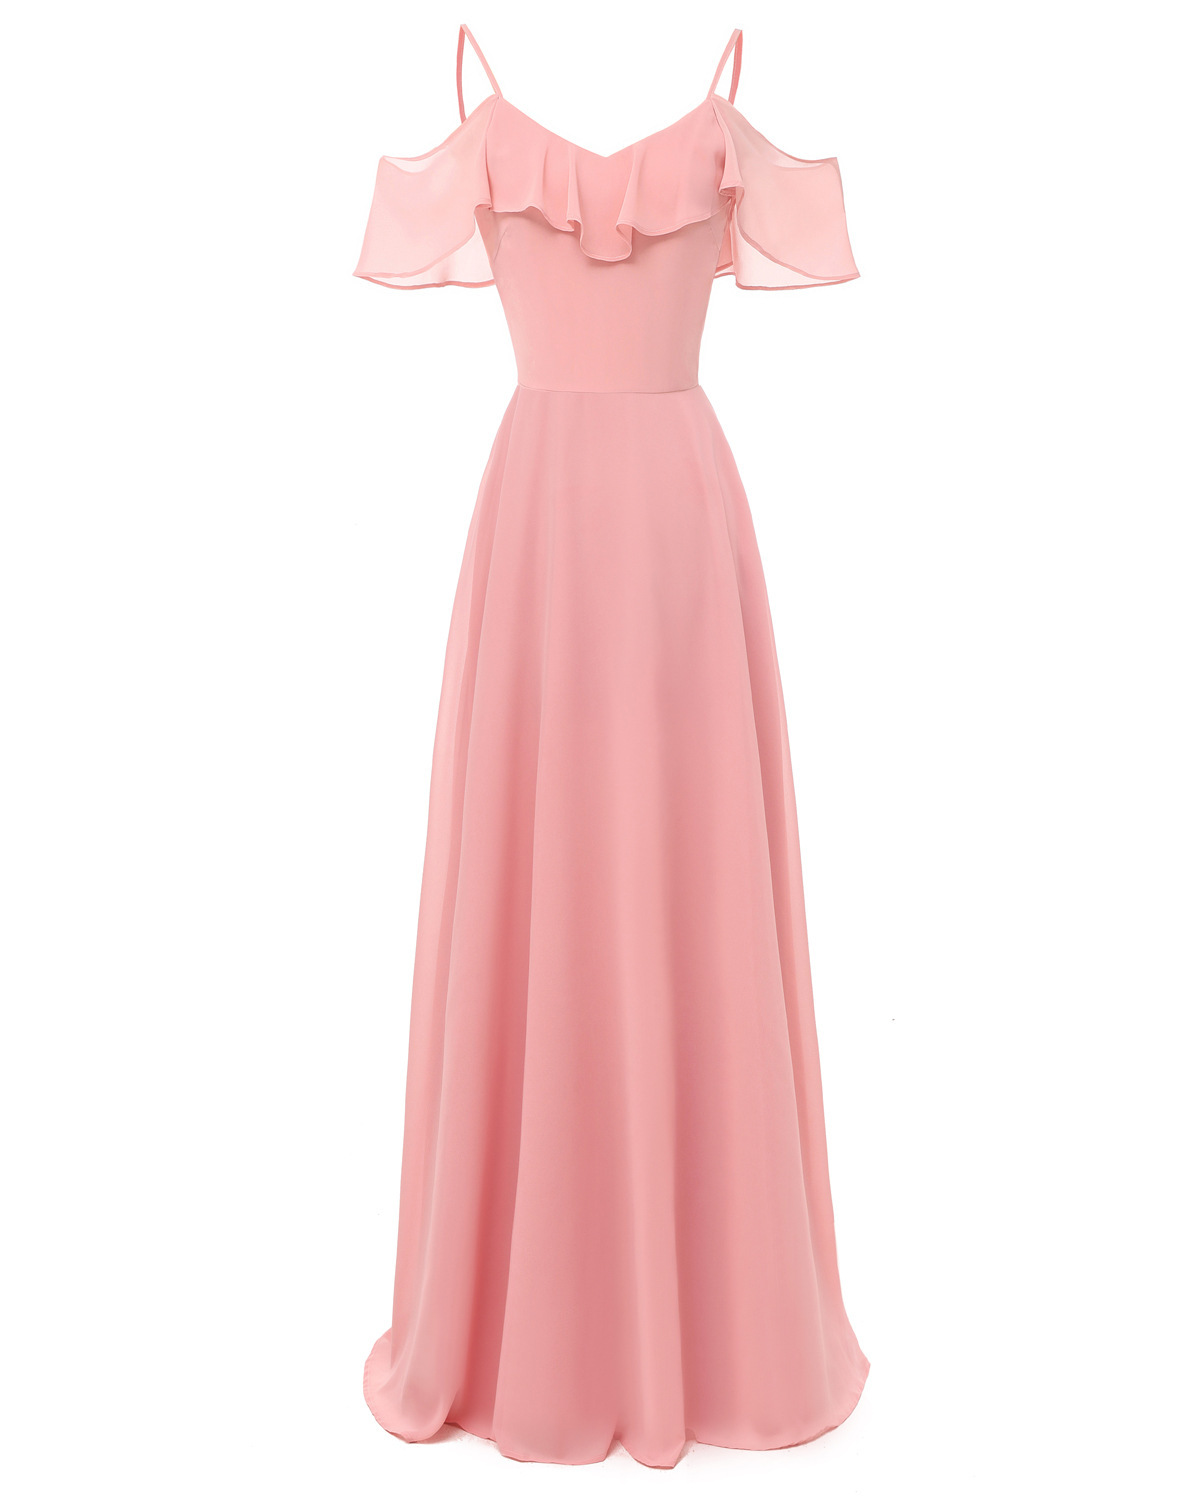 Spaghetti Straps Pink Chiffon Prom Dress Floor Length Women Evening Dress 2019